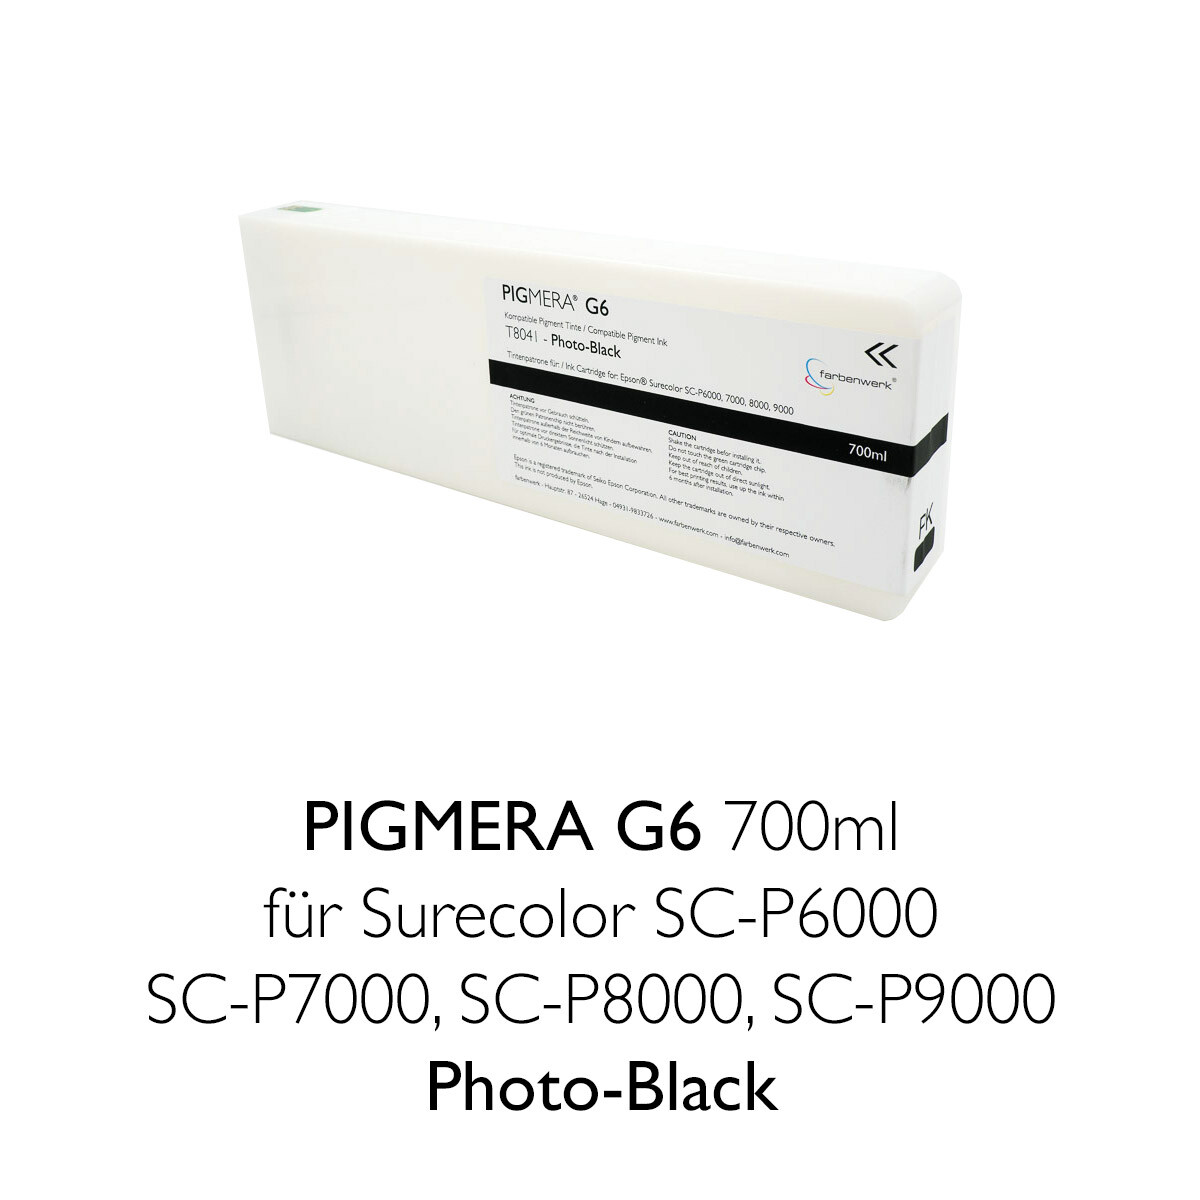 farbenwerk Pigmera G6 ink cartridge 700ml T8041 Photo-Black